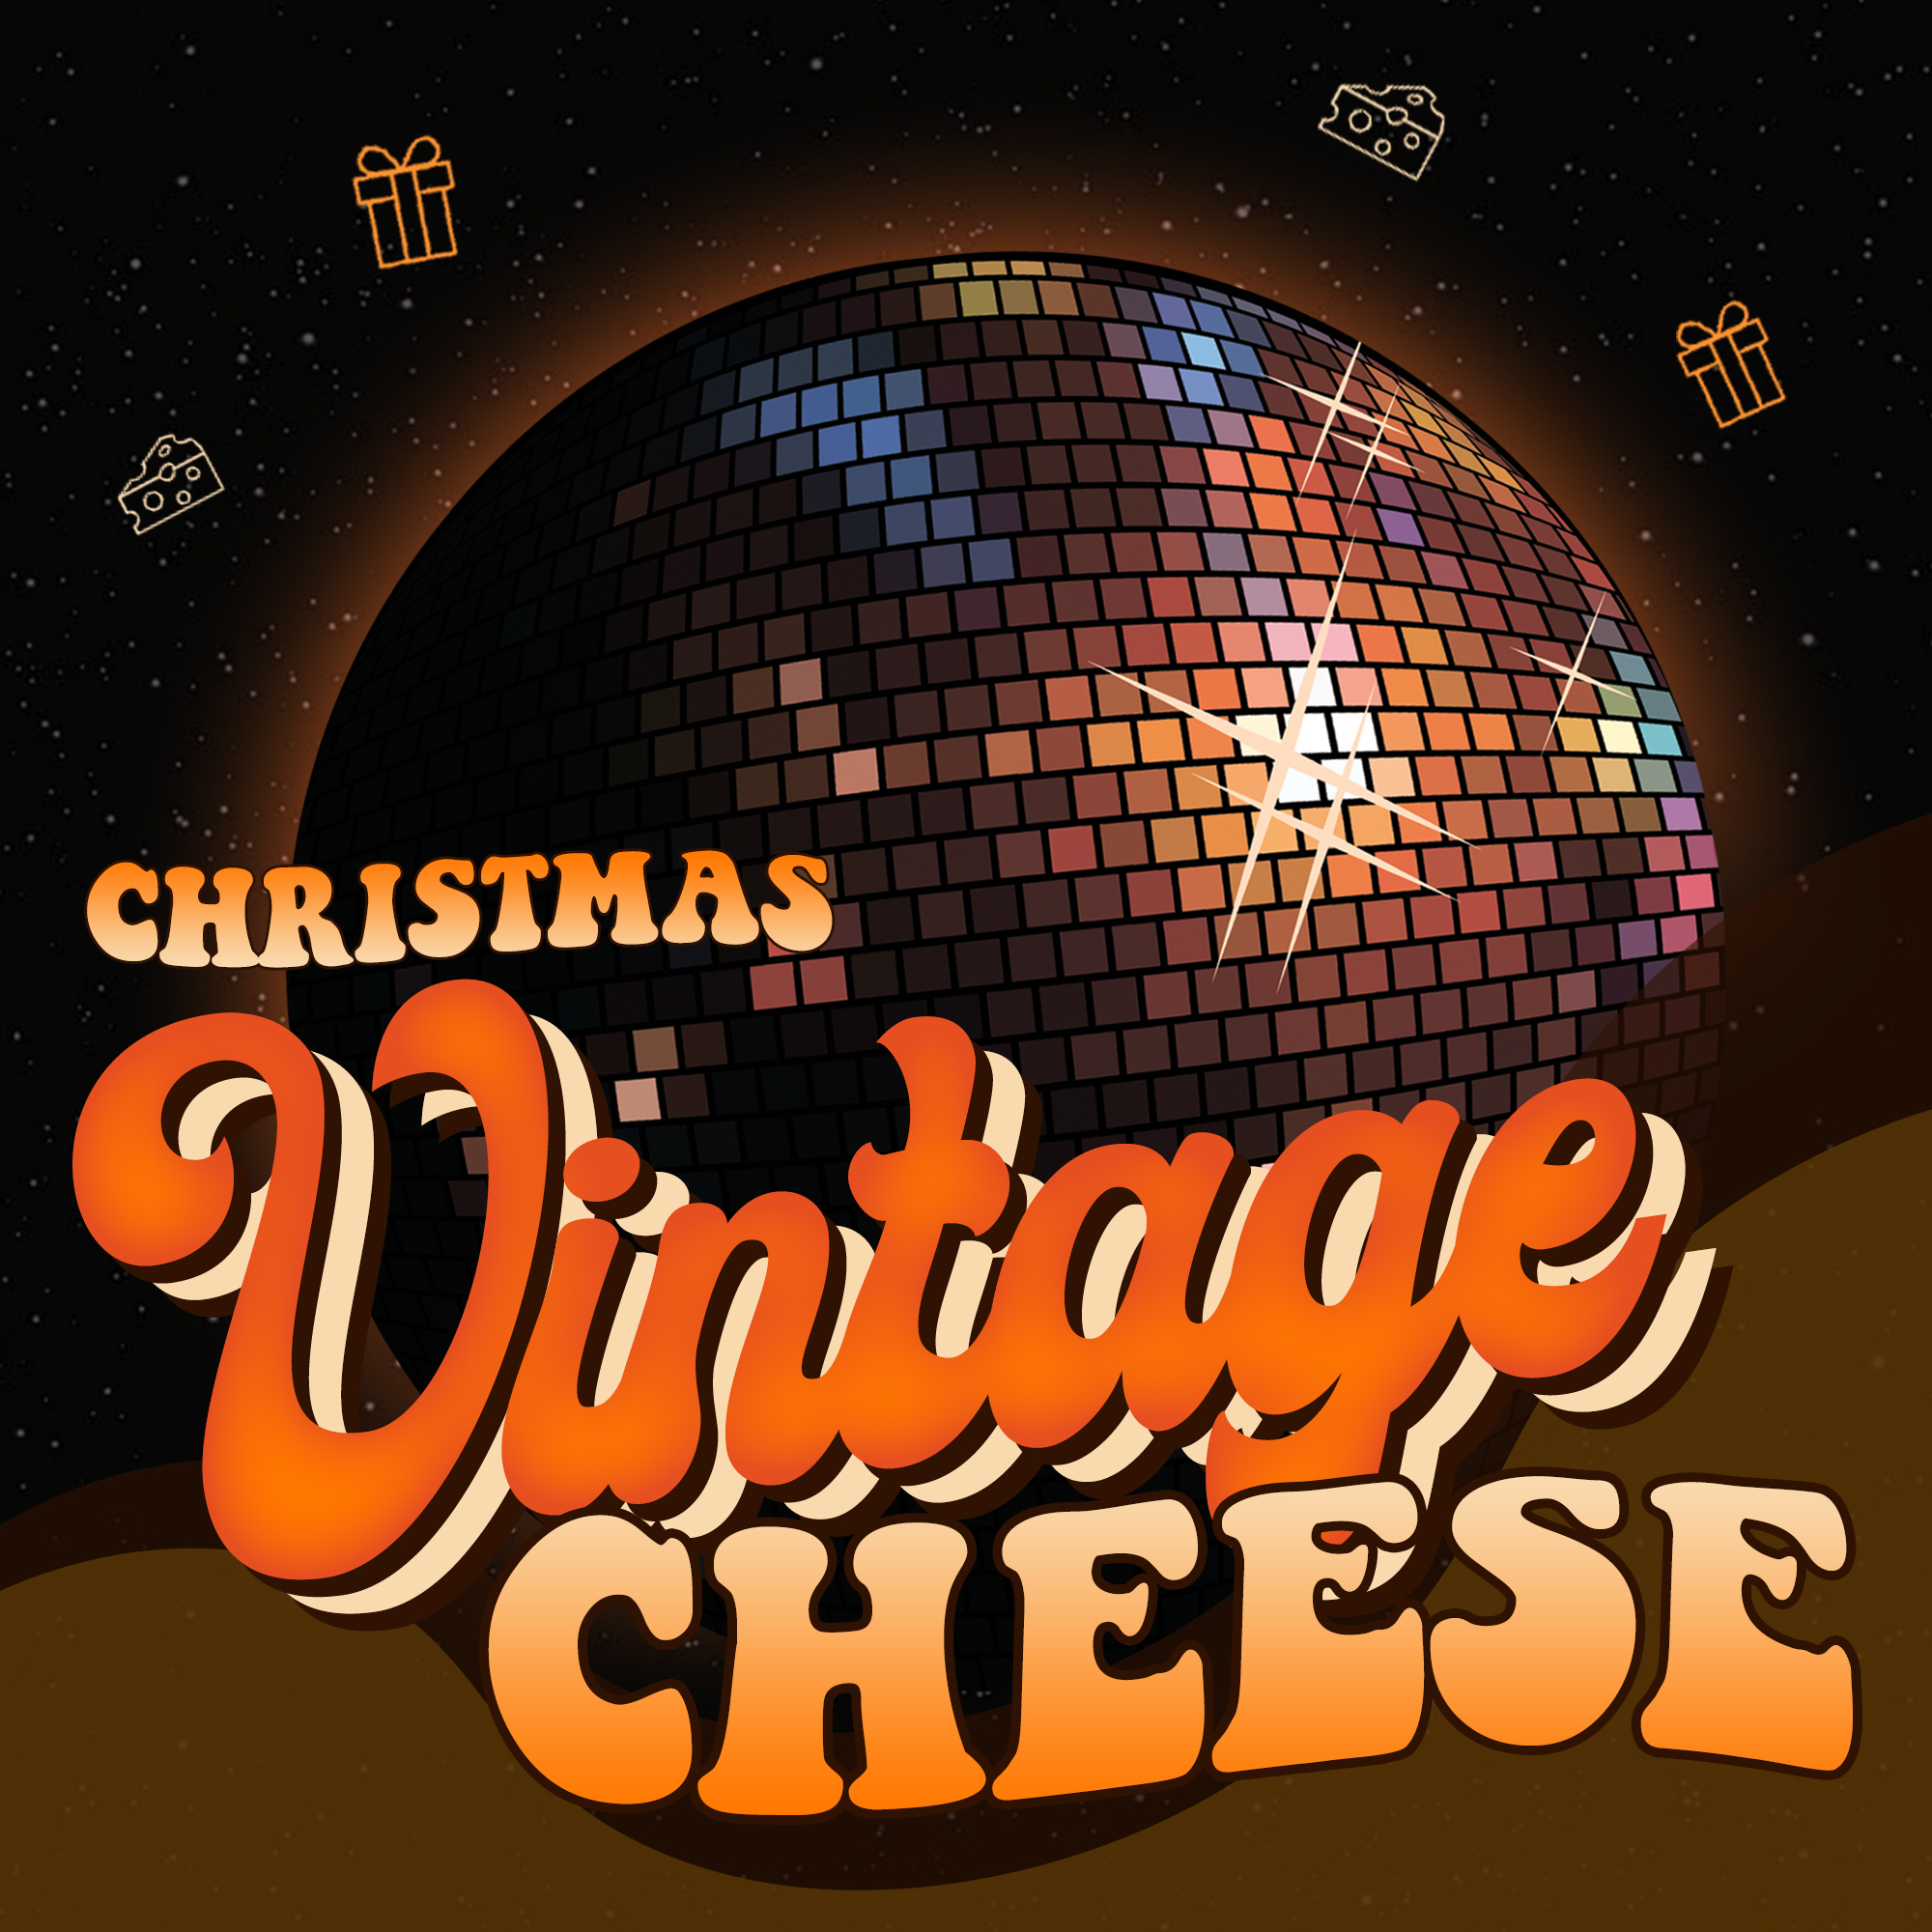 Christmas Vintage Cheese